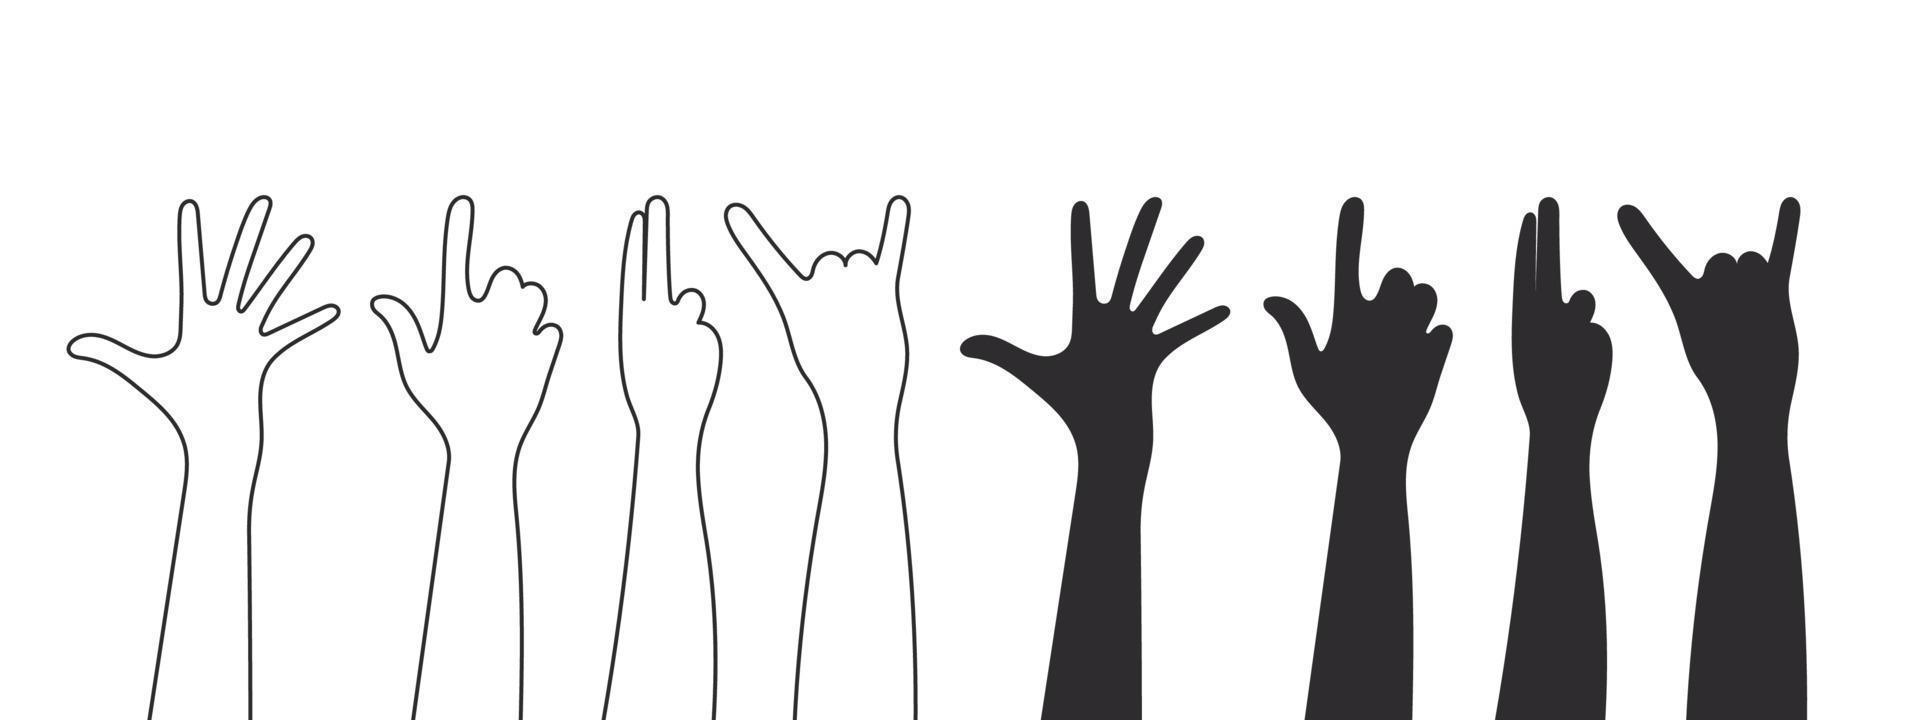 Hand gesture silhouettes. Teamwork, collaboration, voting, volunteering concert. Vector illustration